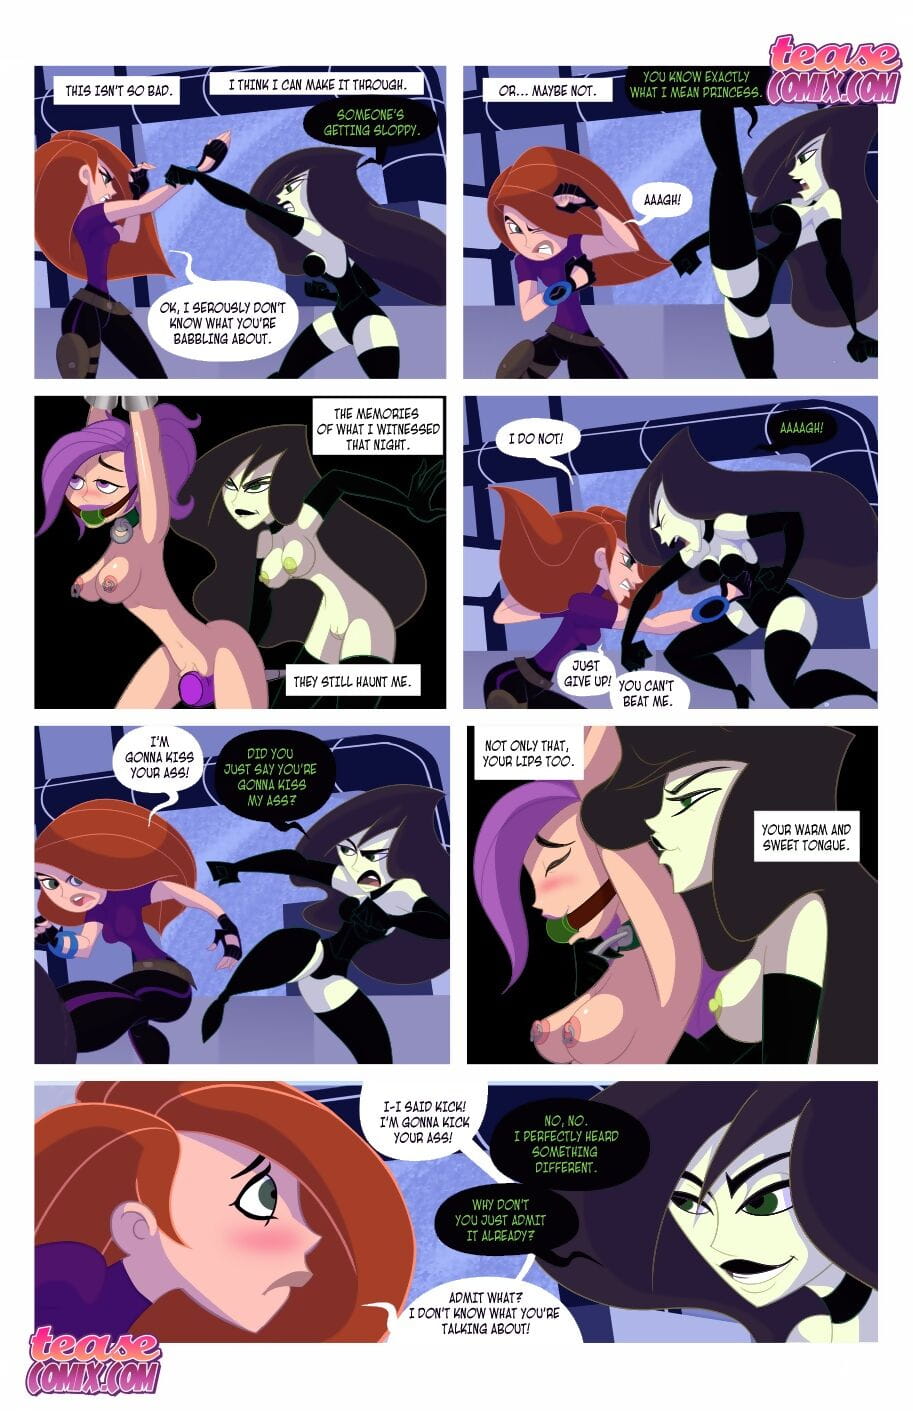 teasecomix ironwolf – kinky possibile problema #02 page 1